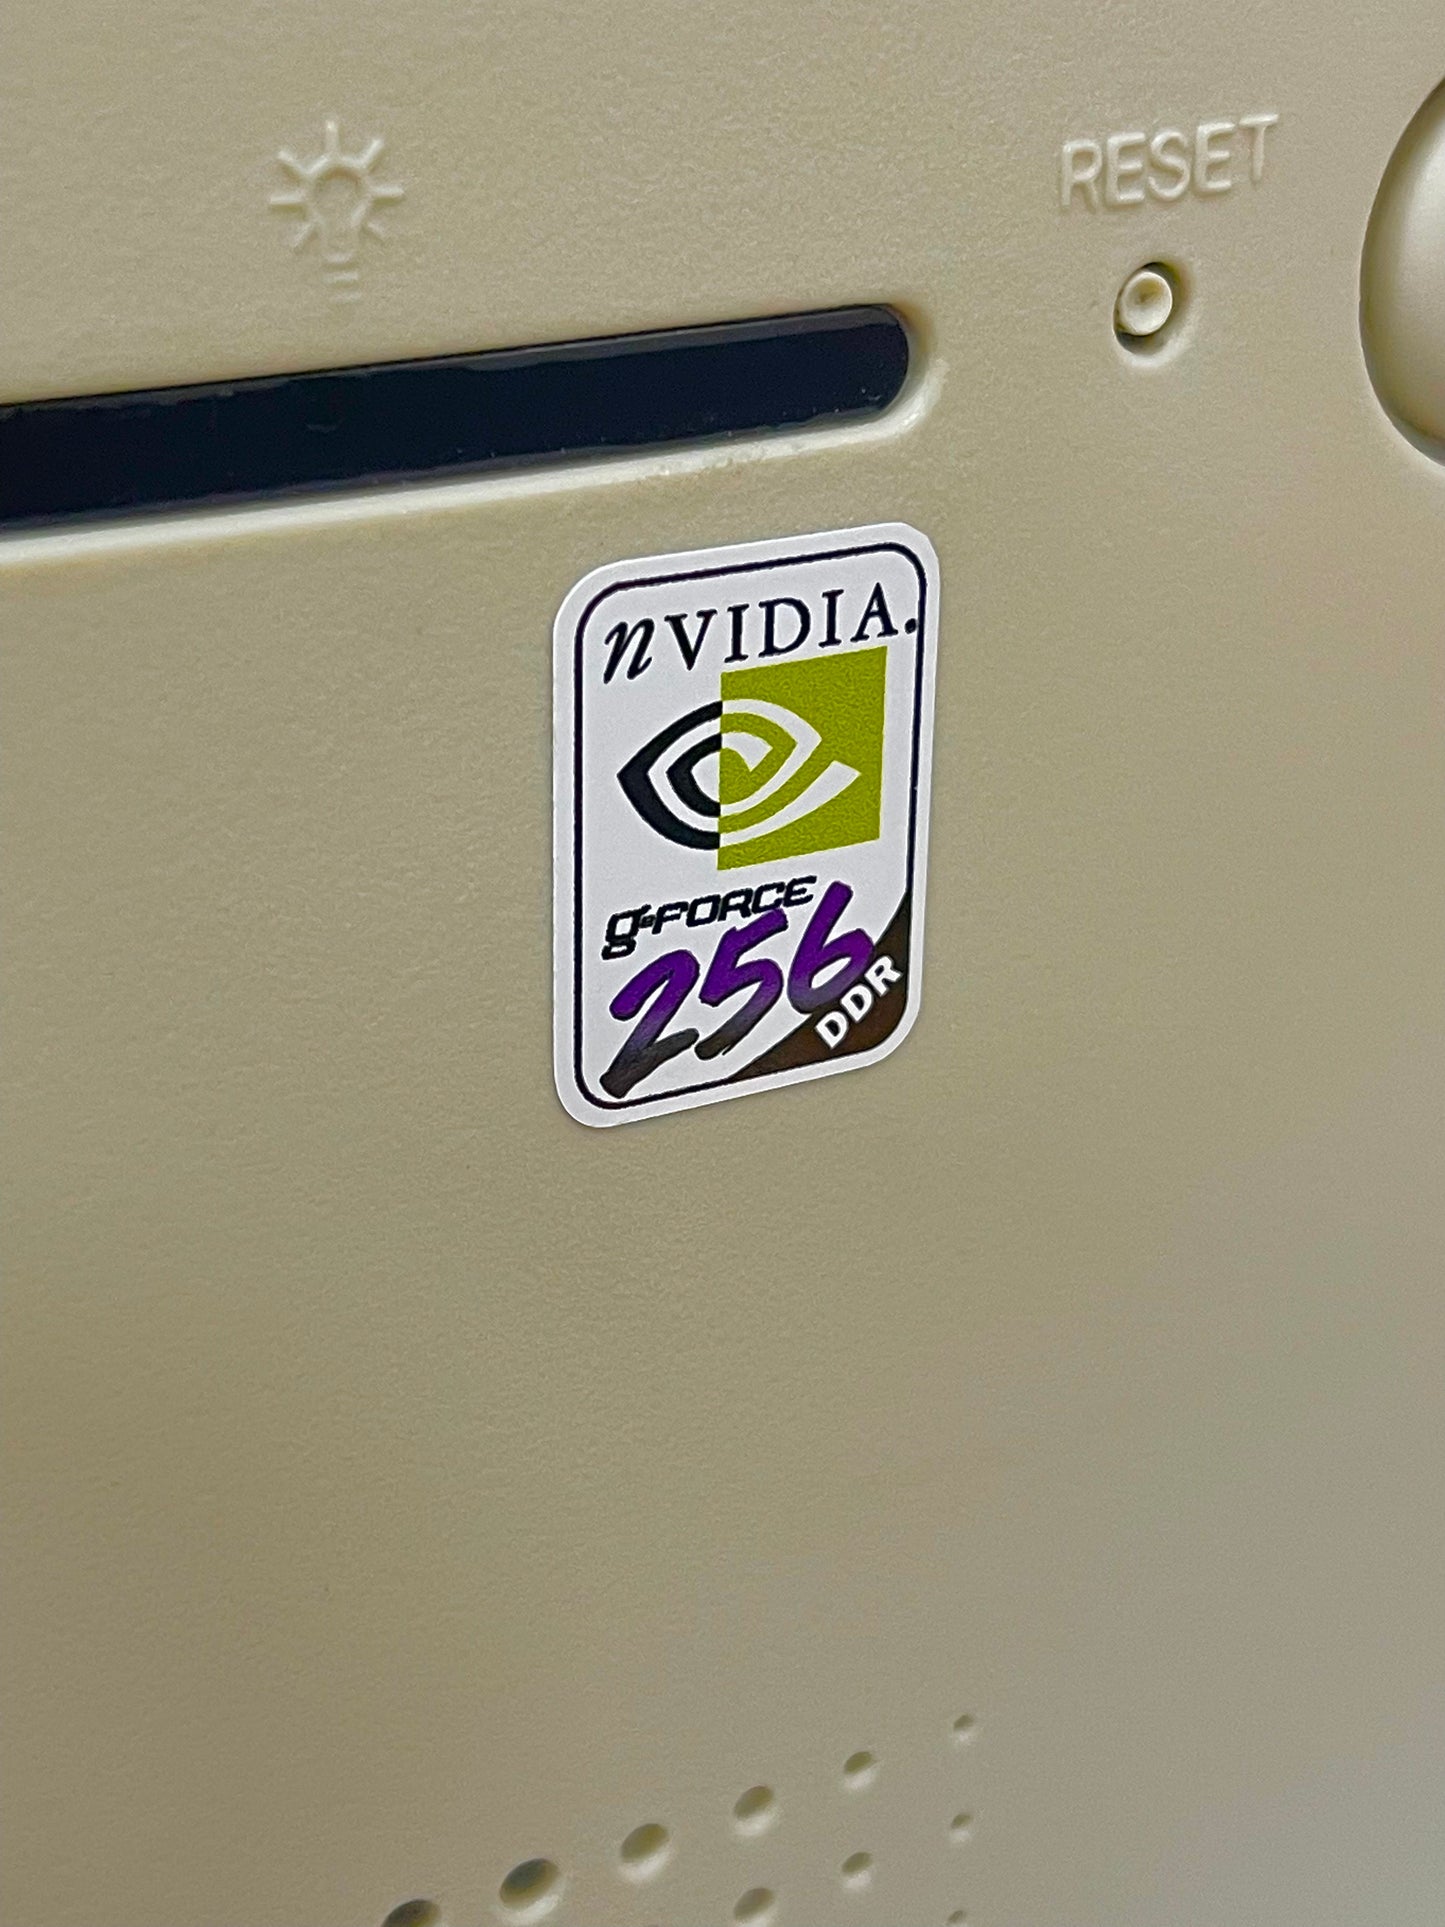 Nvidia Geforce 256 DDR Video Graphics Case Badge Sticker - White